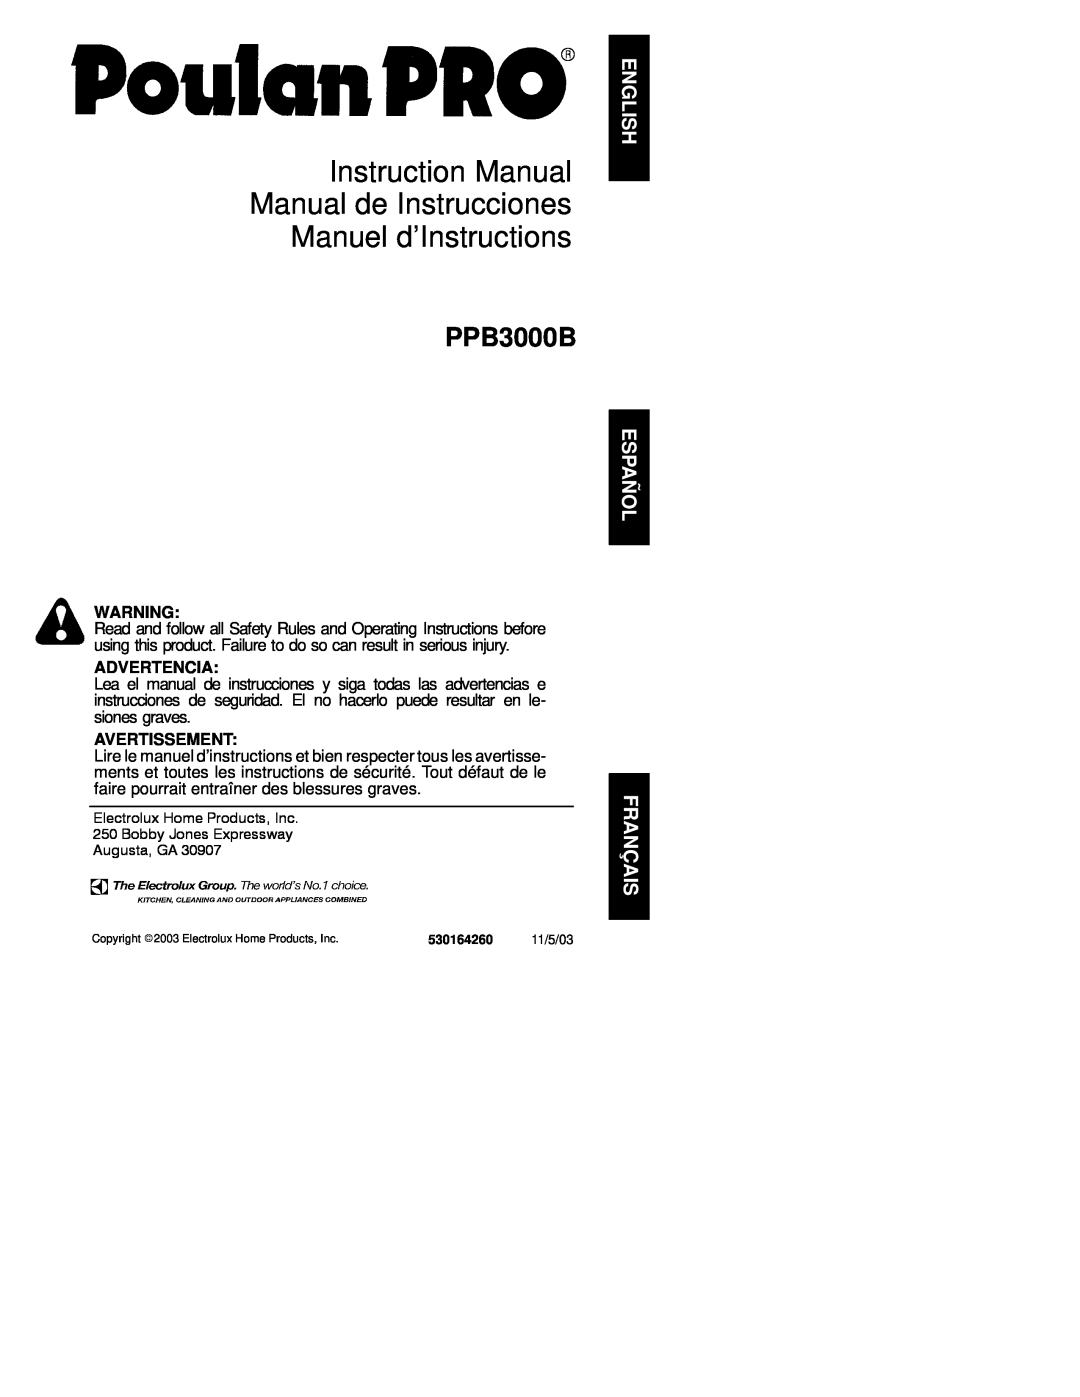 Poulan PPB3000B instruction manual Manuel d’Instructions, Advertencia, Avertissement 